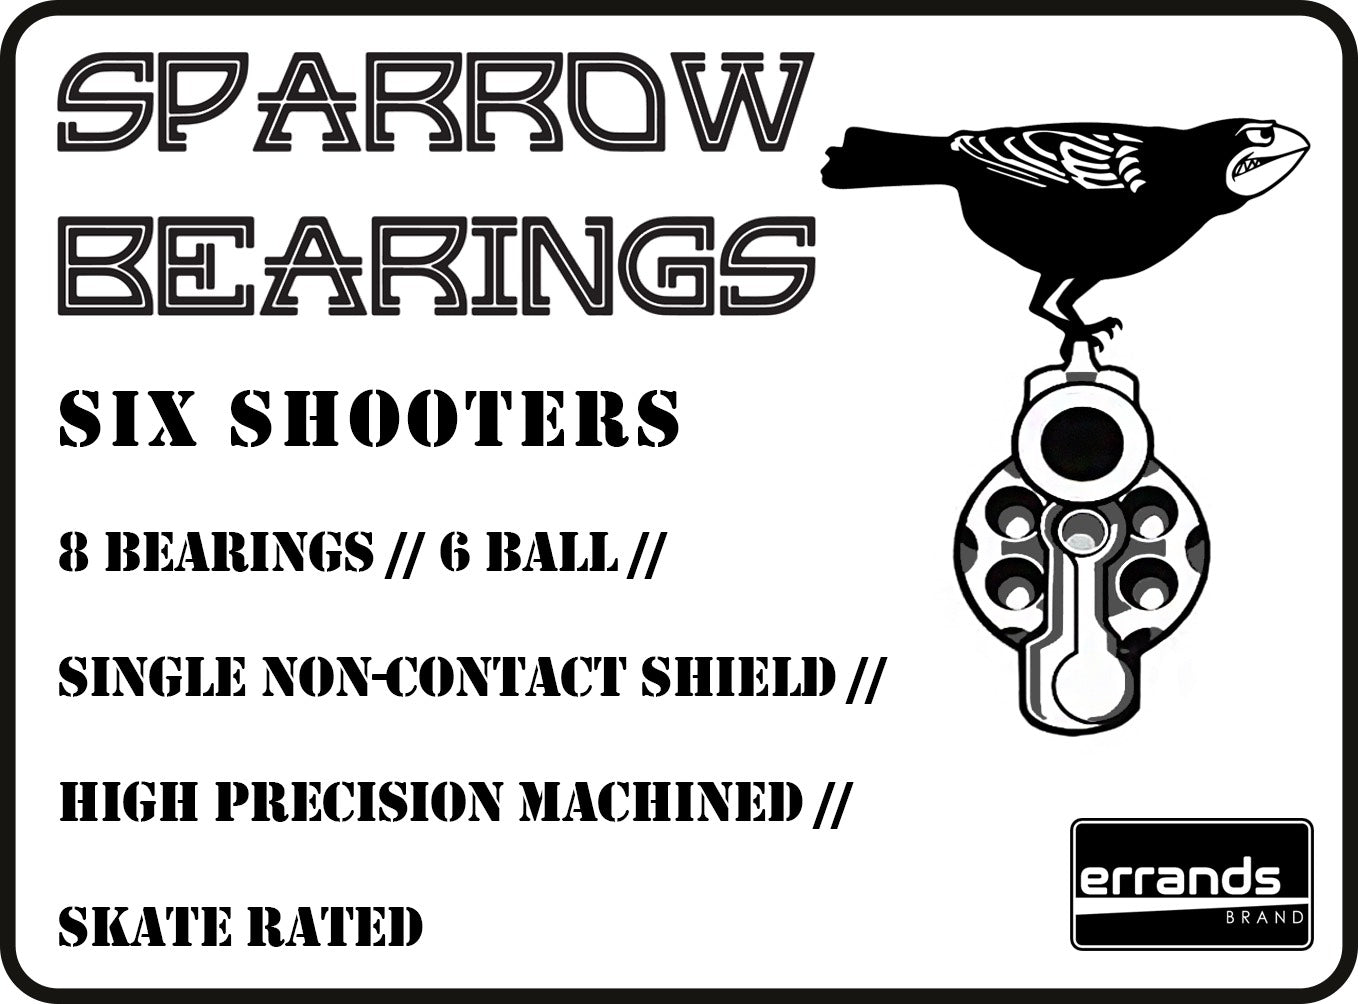 Six shooters - Sparrow Bearings